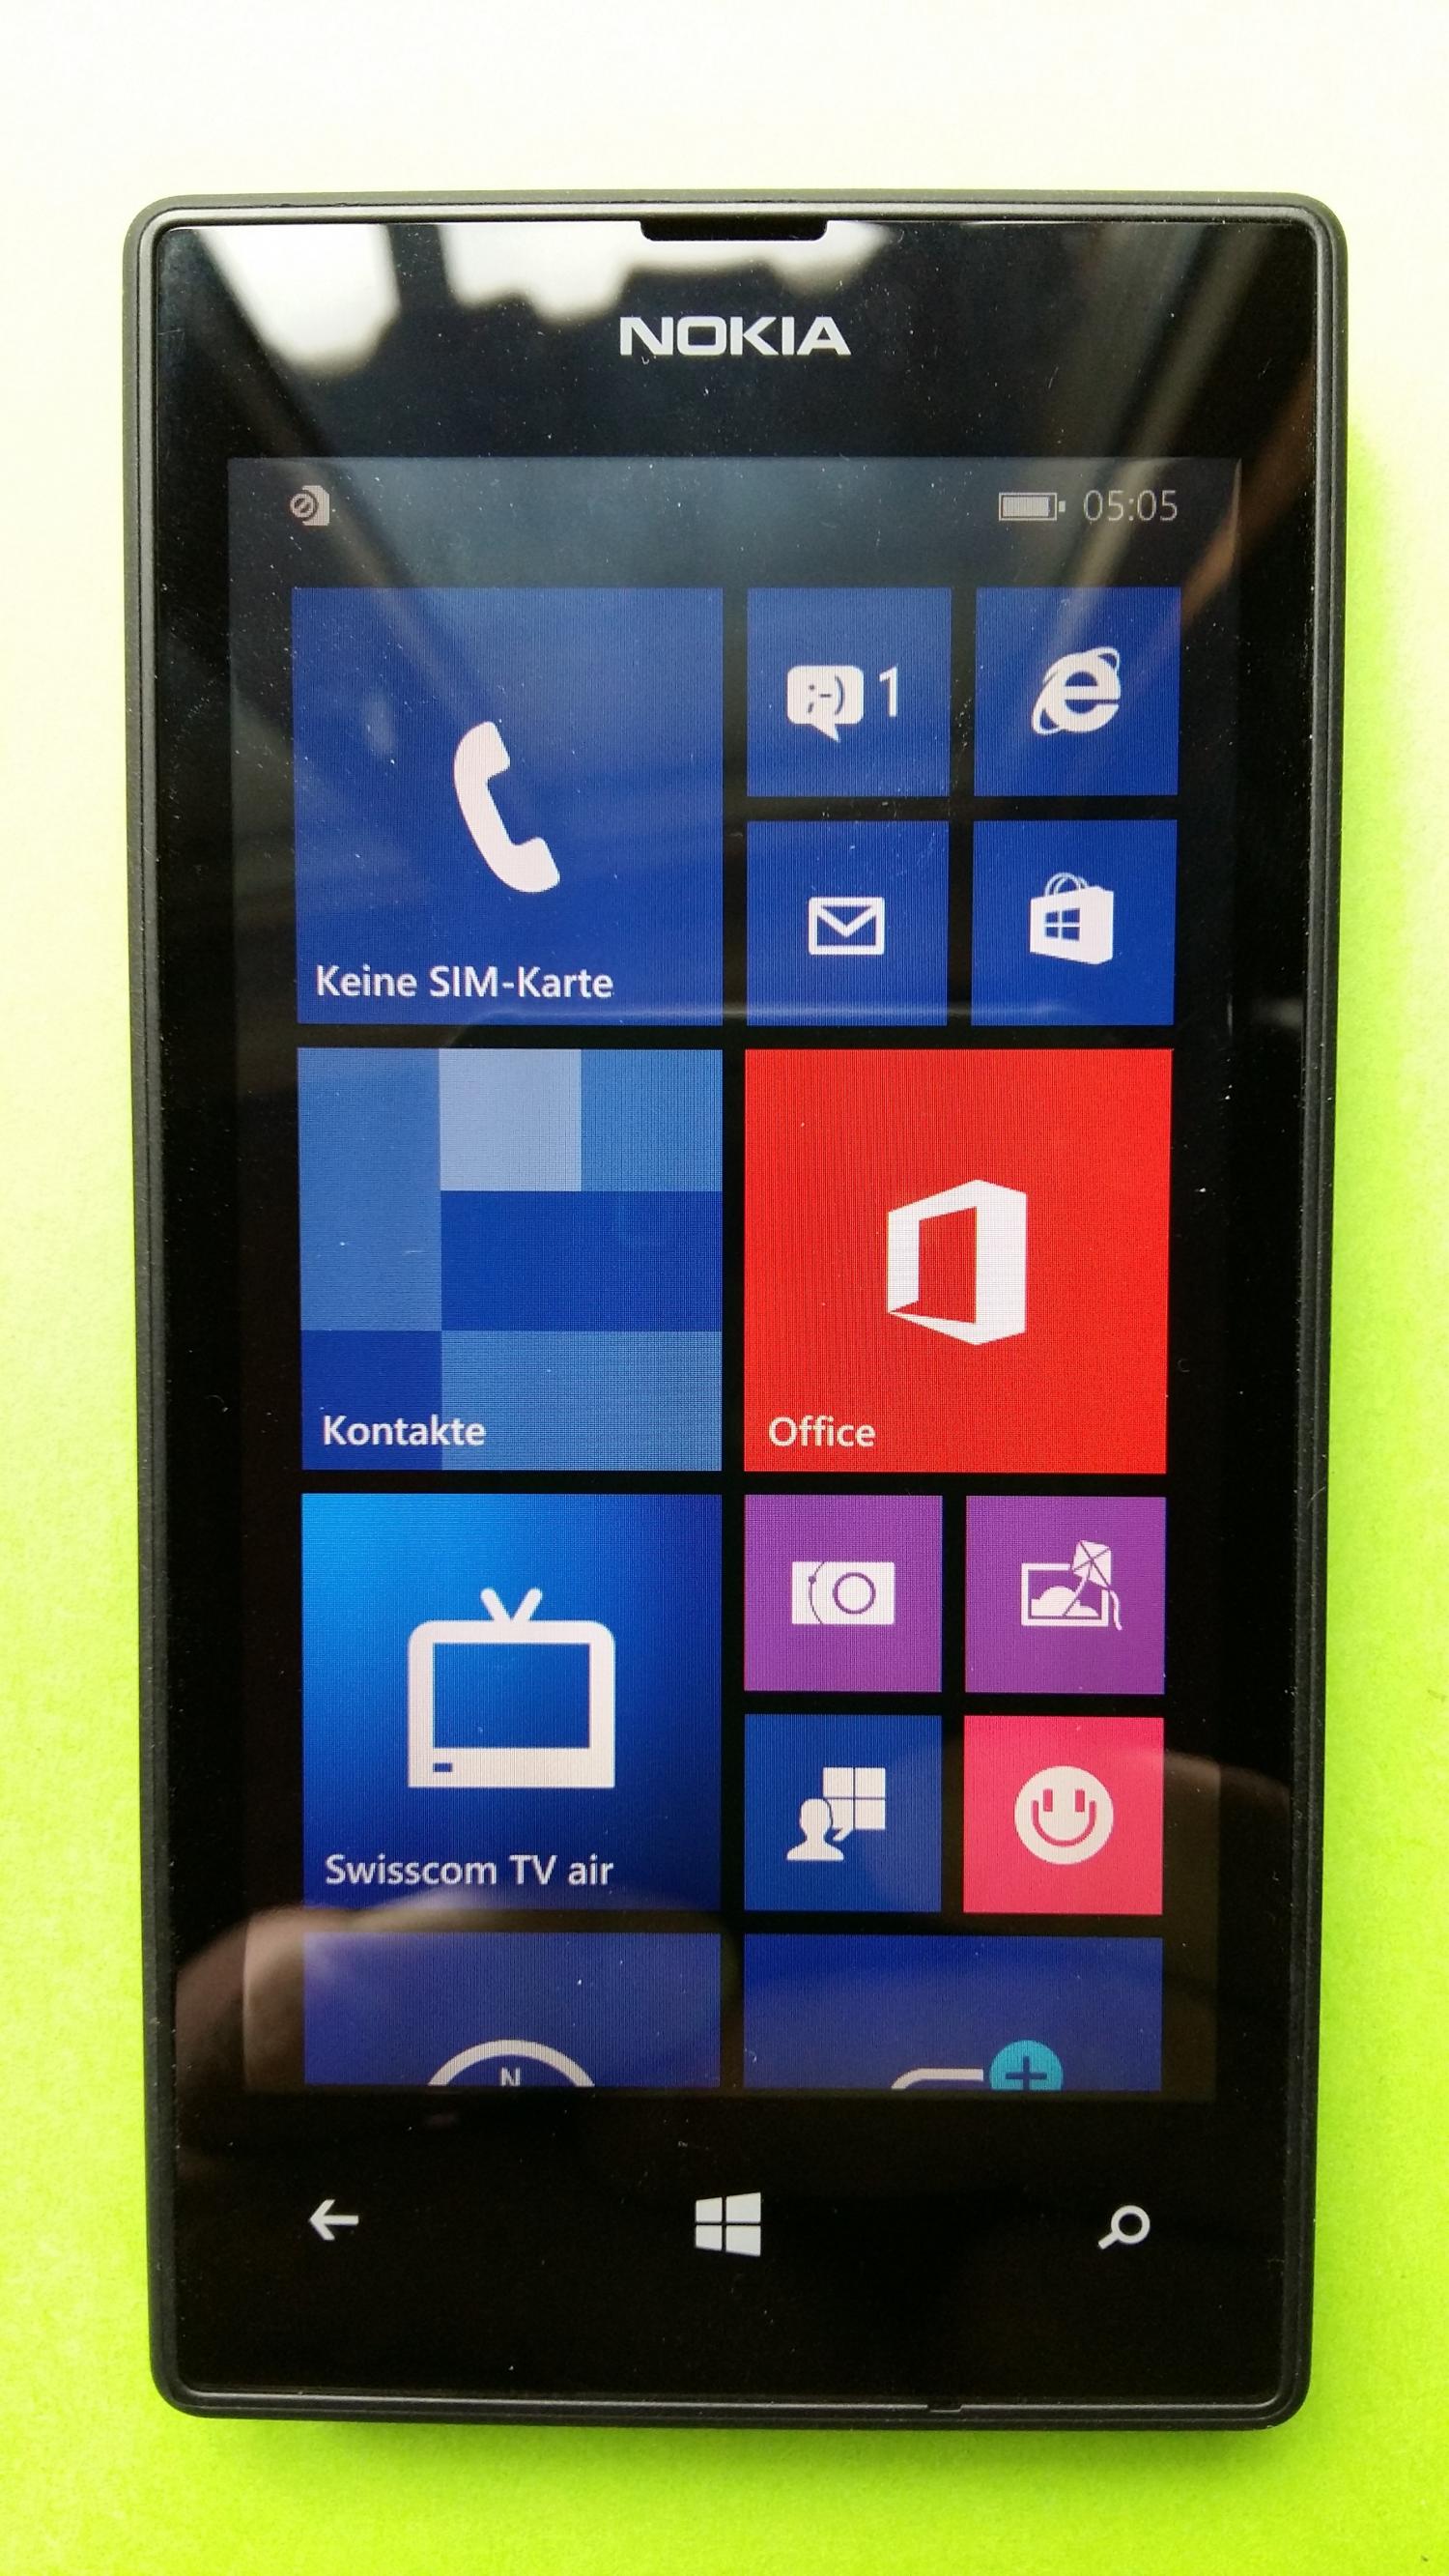 image-7300230-Nokia 520 Lumia (1)1.jpg